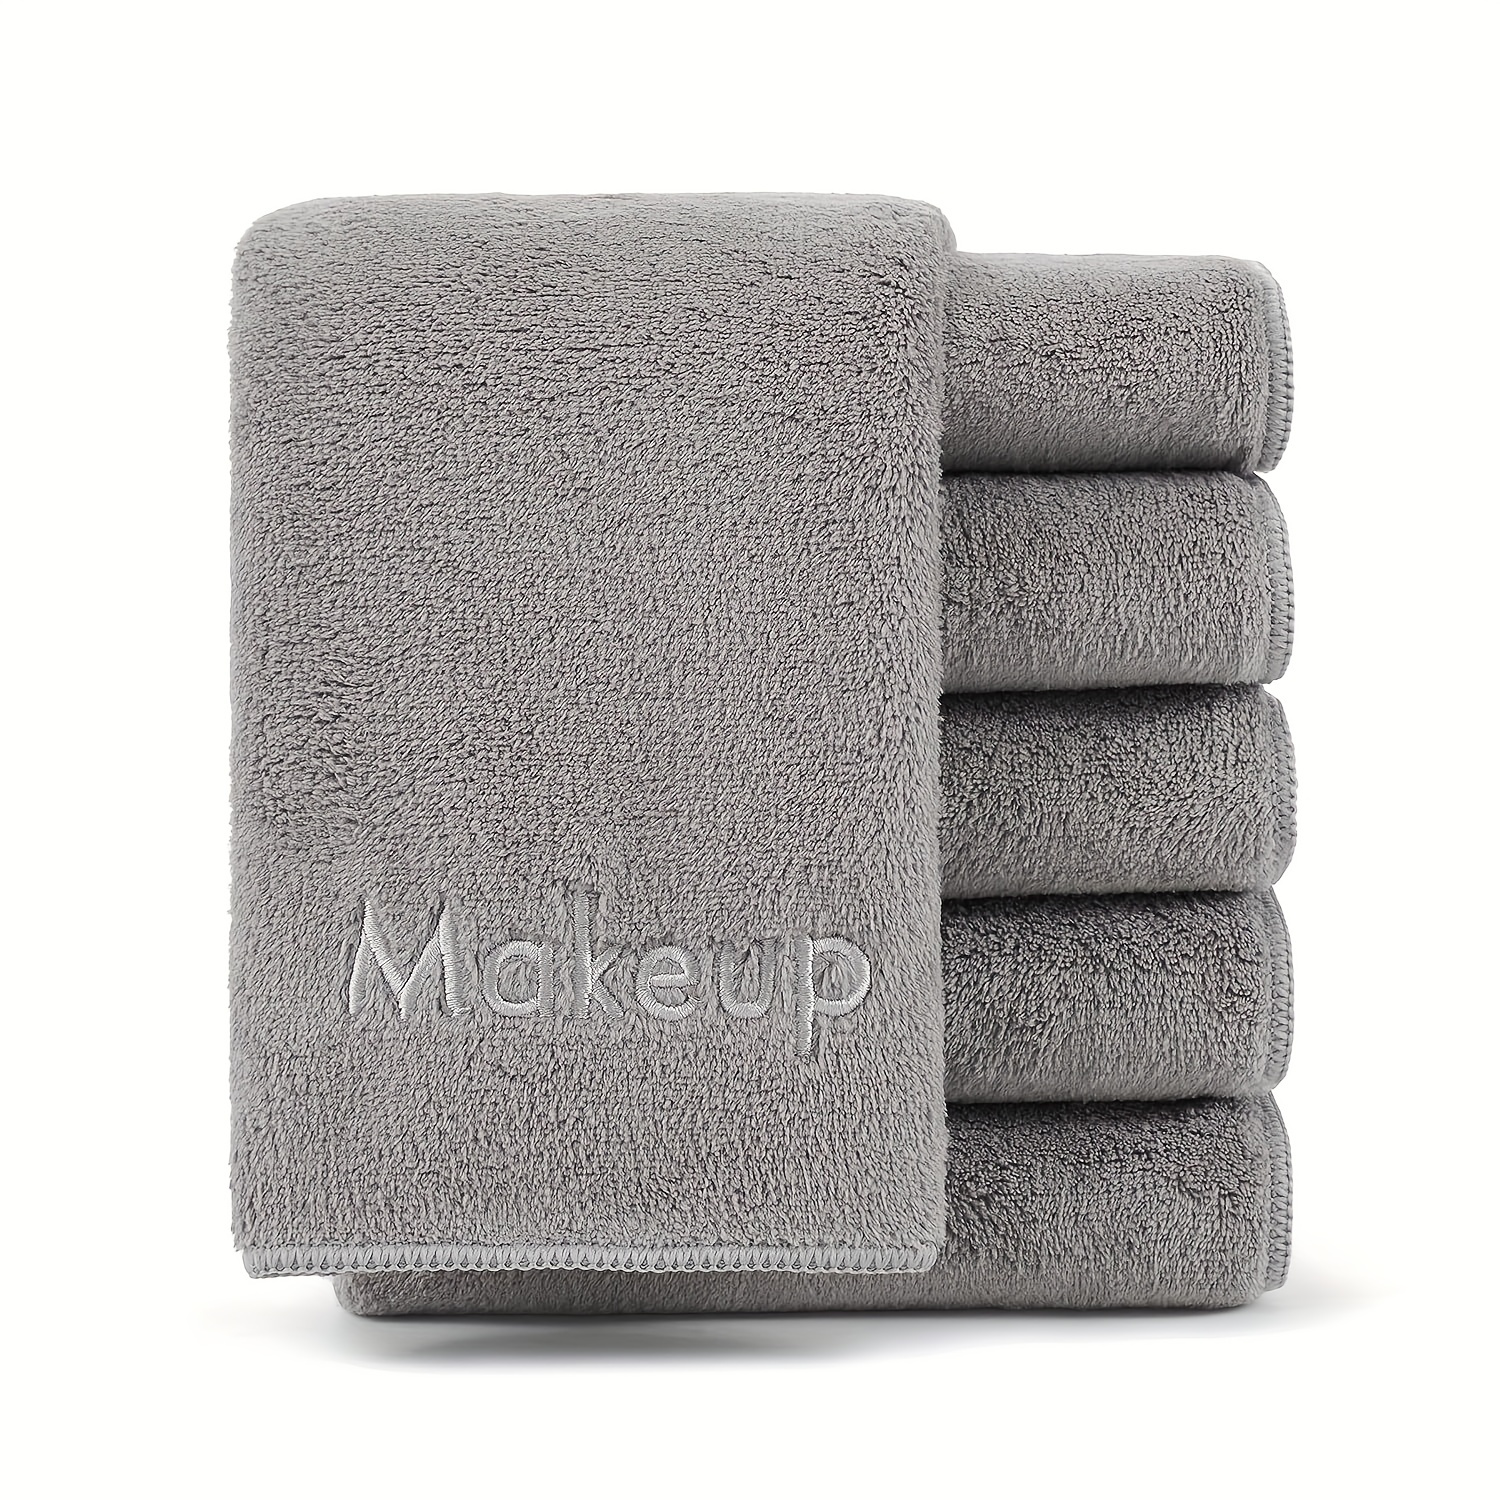 

5 Pack Makeup Remover Wash Cloth - Soft Coral Fleece Microfiber Fingertip Face Towel Washcloths For Hand And Make Up